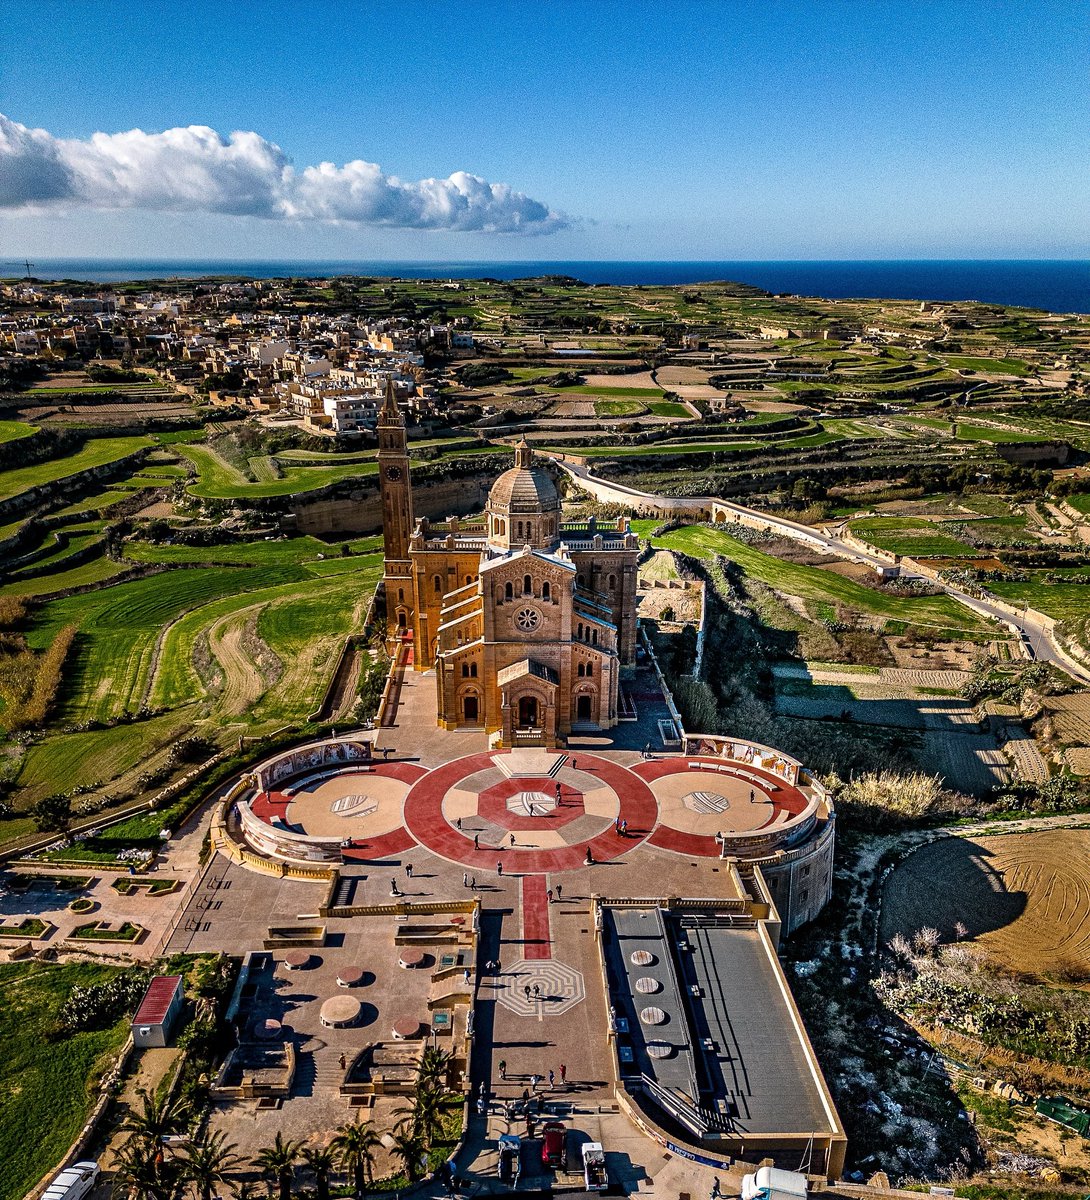 Jaw-dropping views from above at Ta' Pinu National Shrine in #Gozo 😍💚 [ 📸 @fabiozollo ] #VisitMalta #VisitGozo #ExploreMore #MoreToExplore